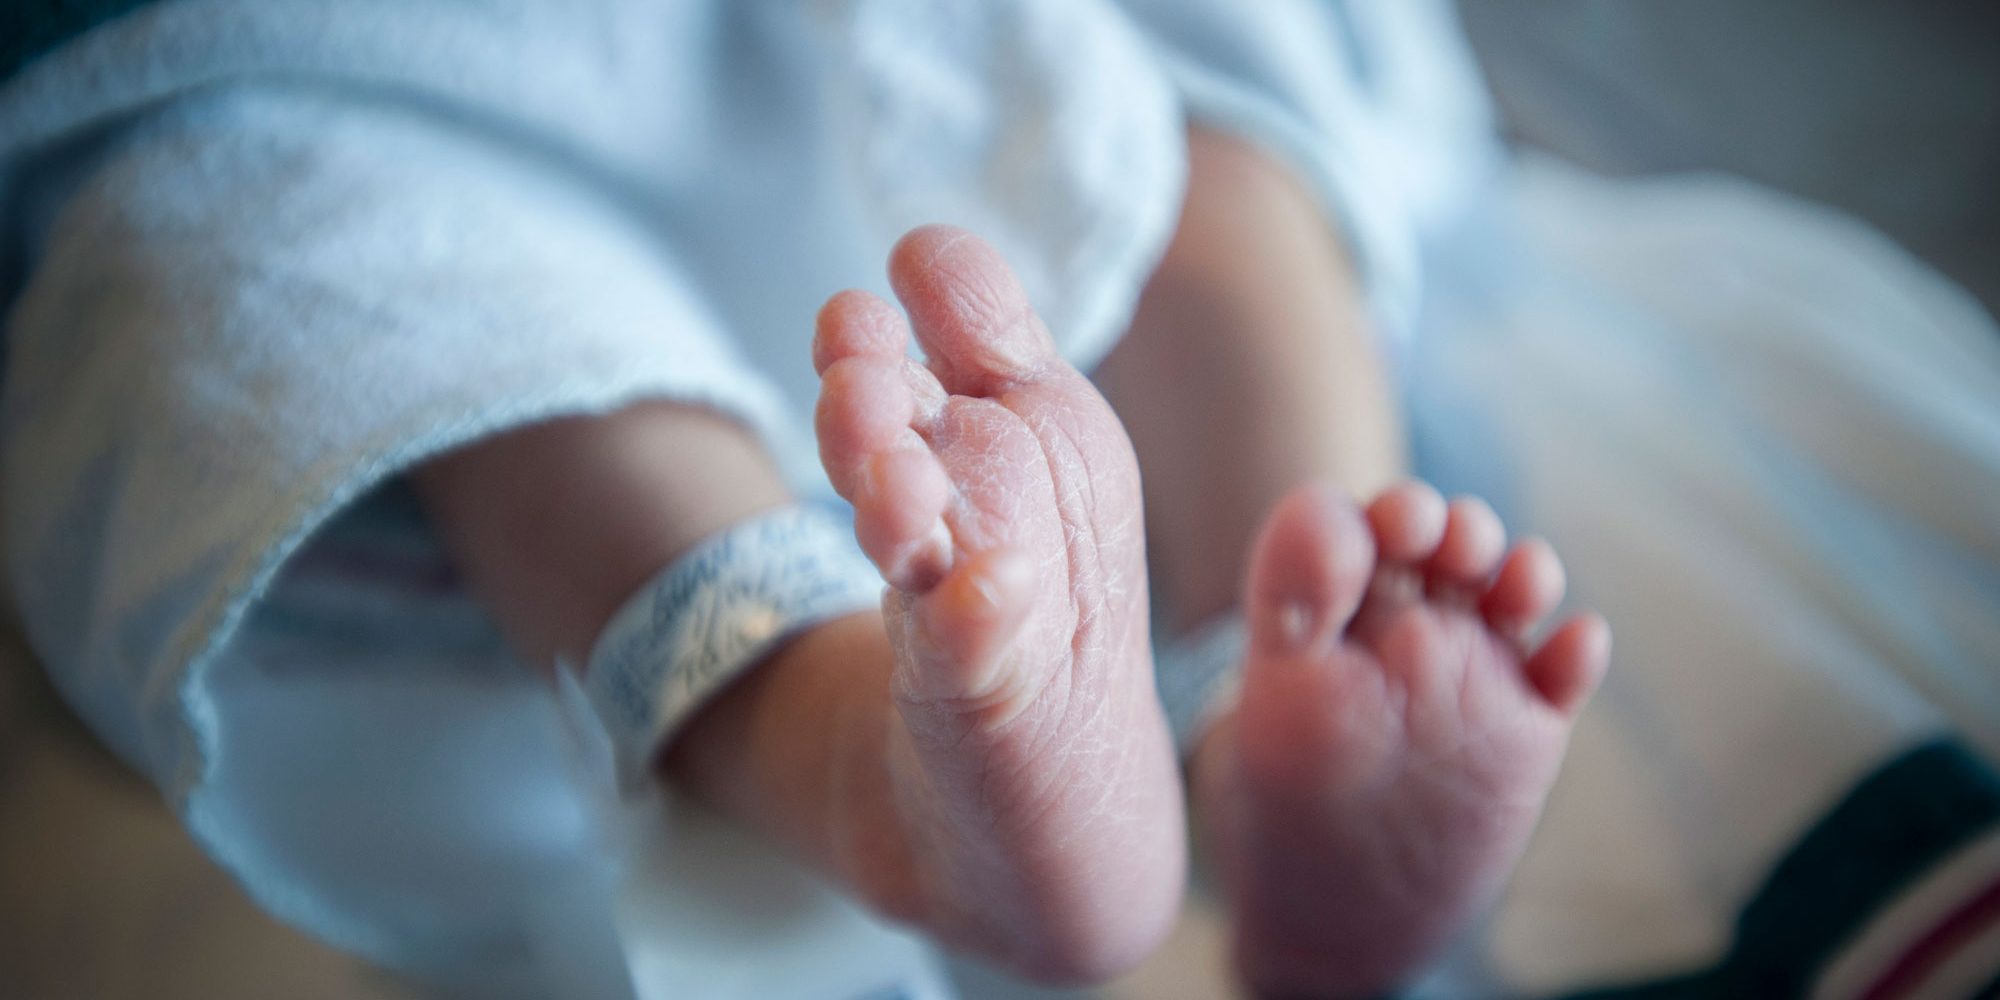 infant feet